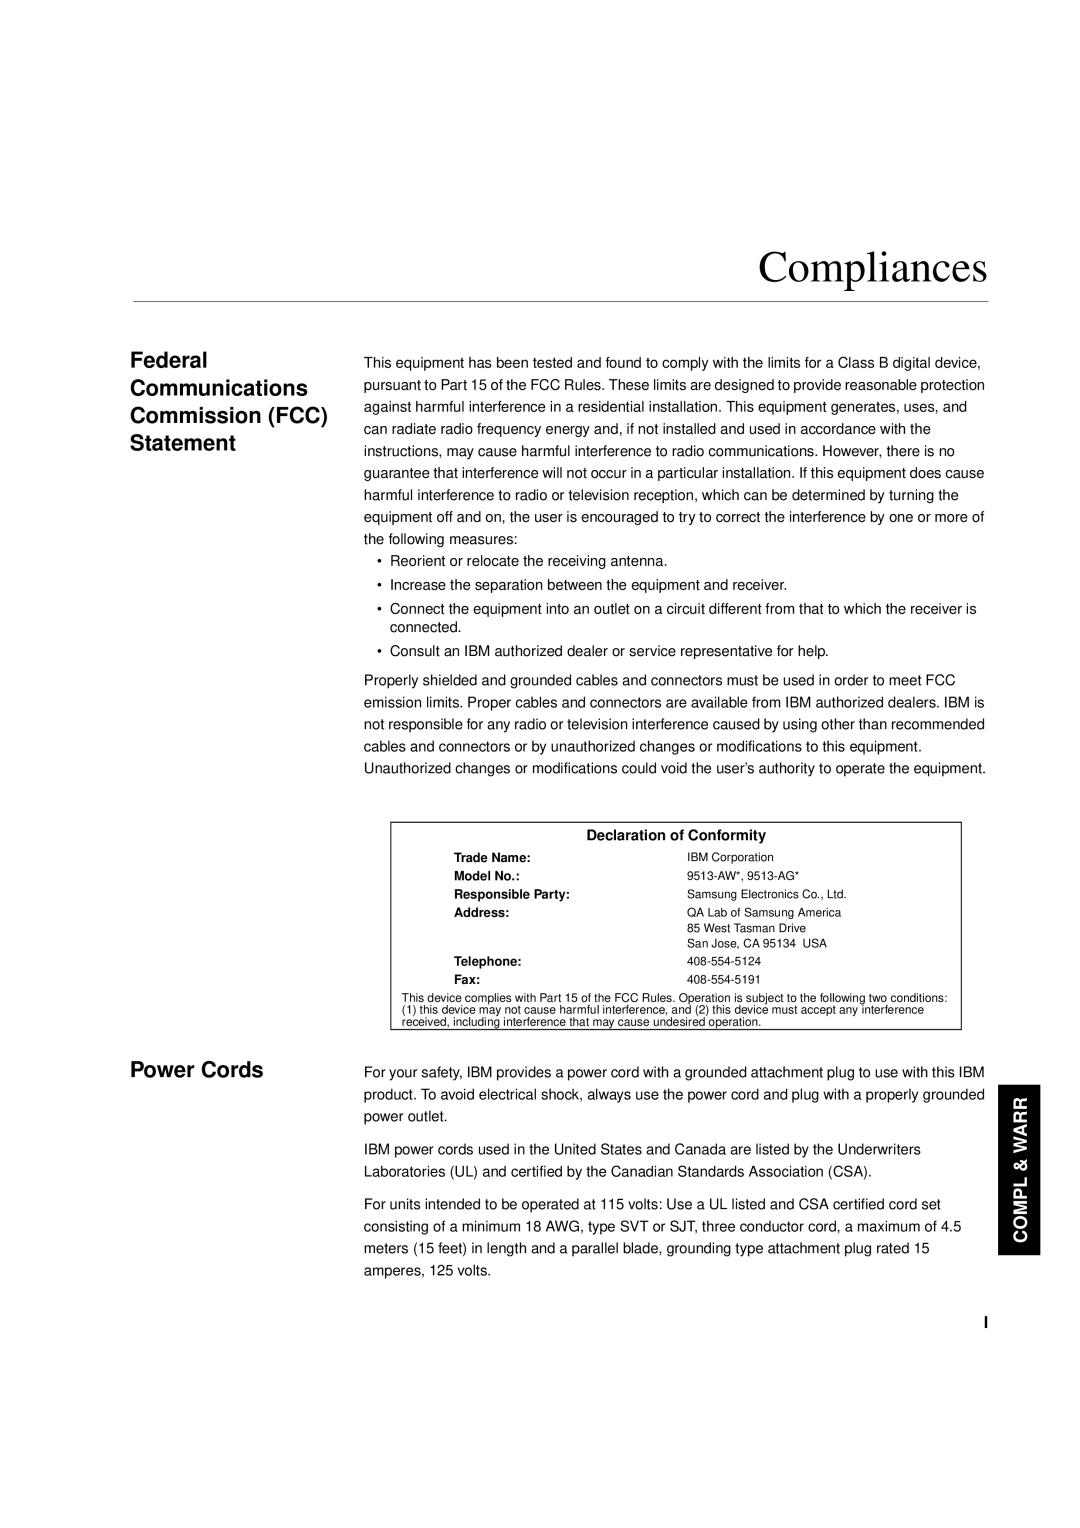 IBM T 55A manual Compliances, Federal Communications Commission FCC Statement, Power Cords, Compl & Warr 